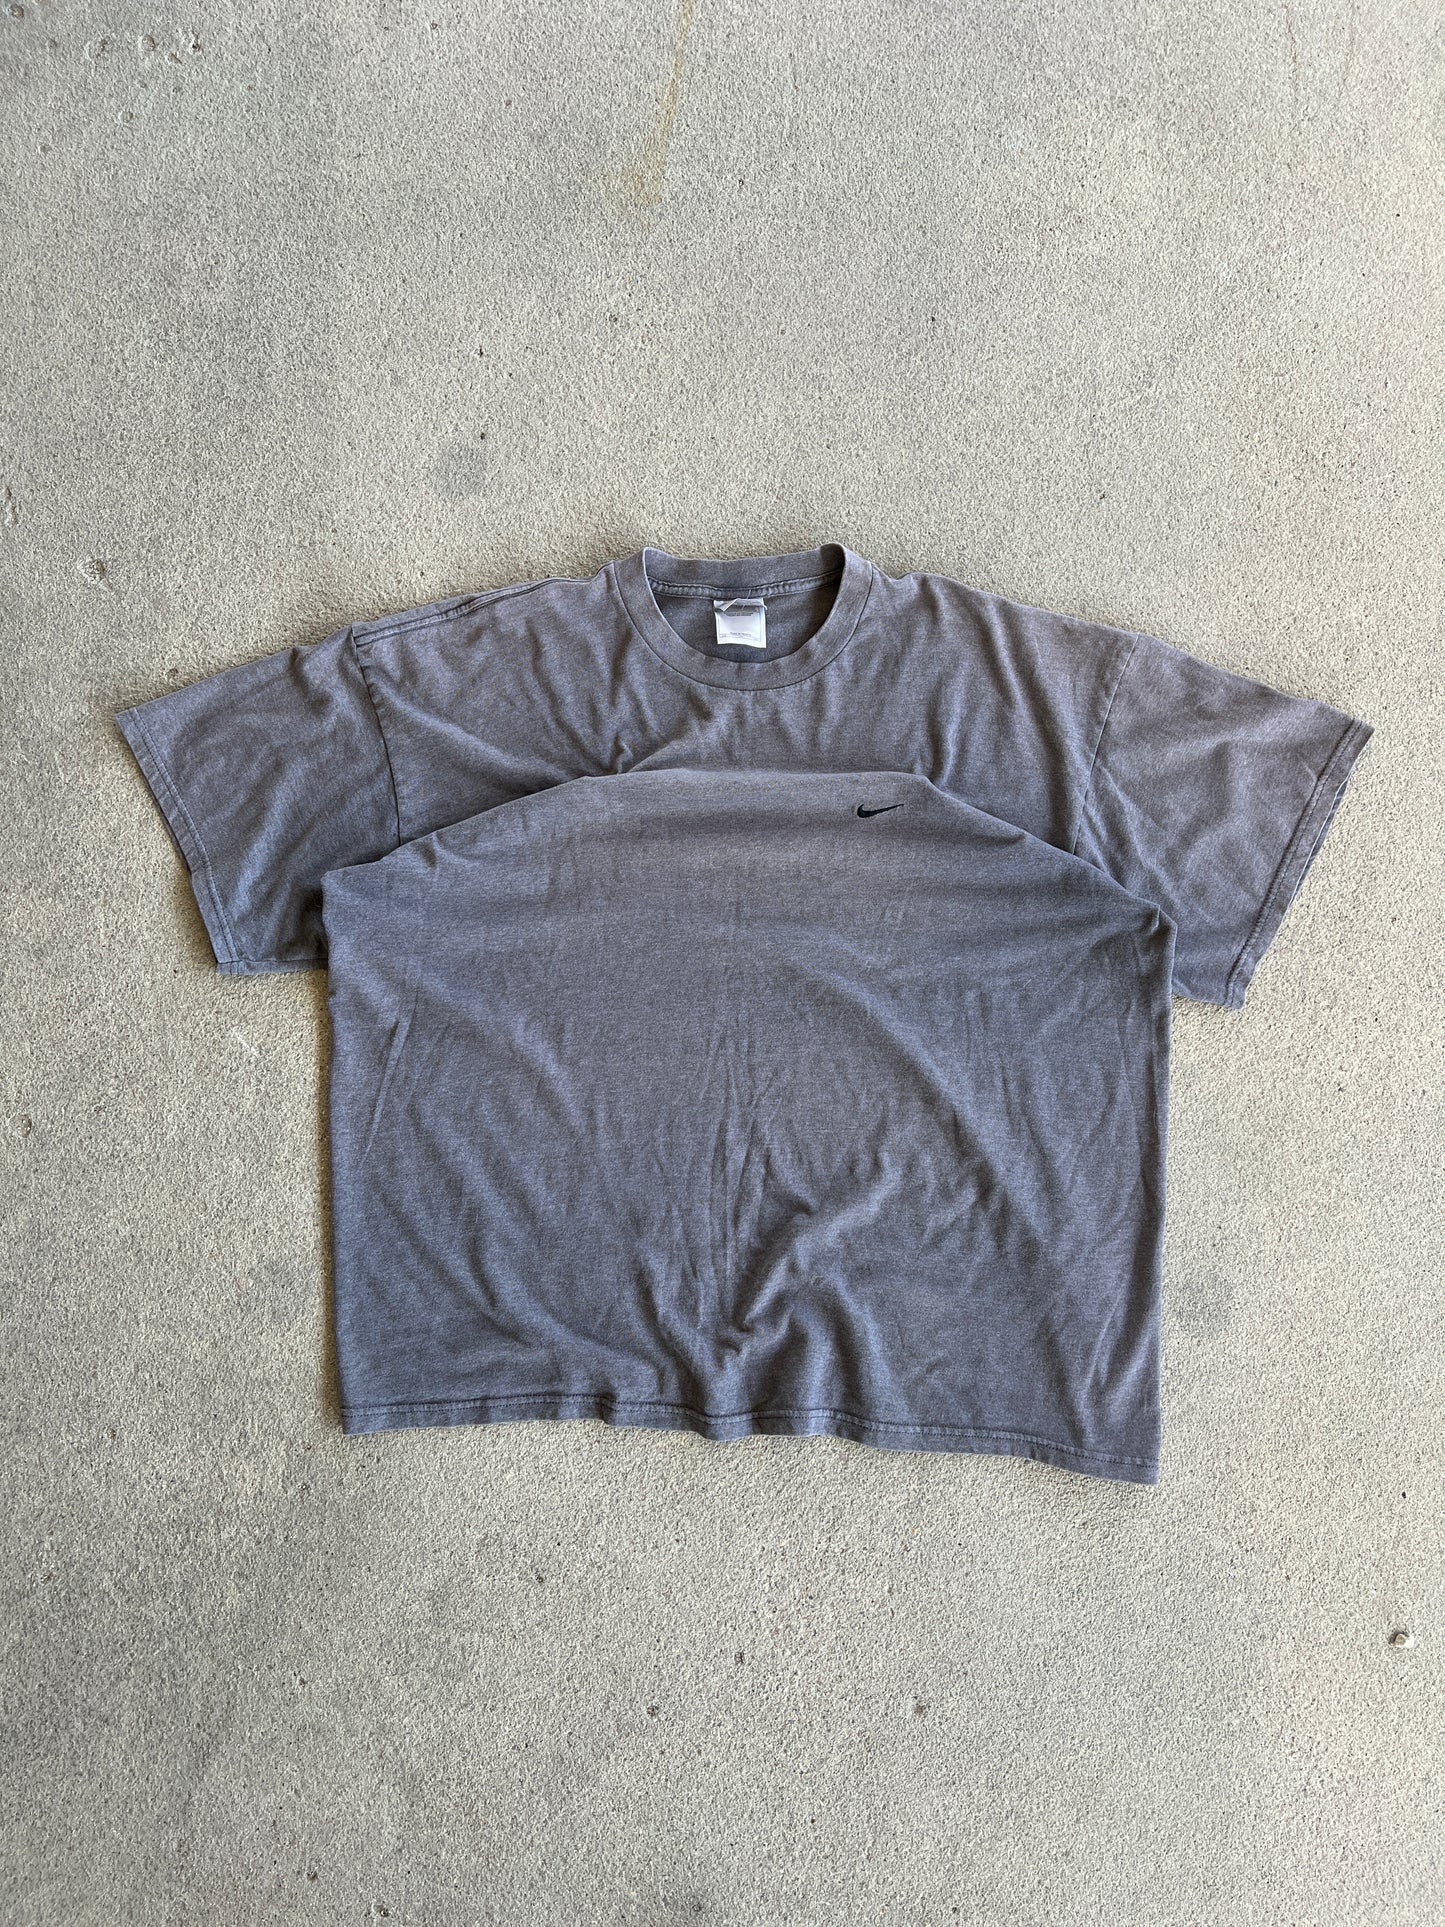 Vintage Grey Nike Shirt - XXL